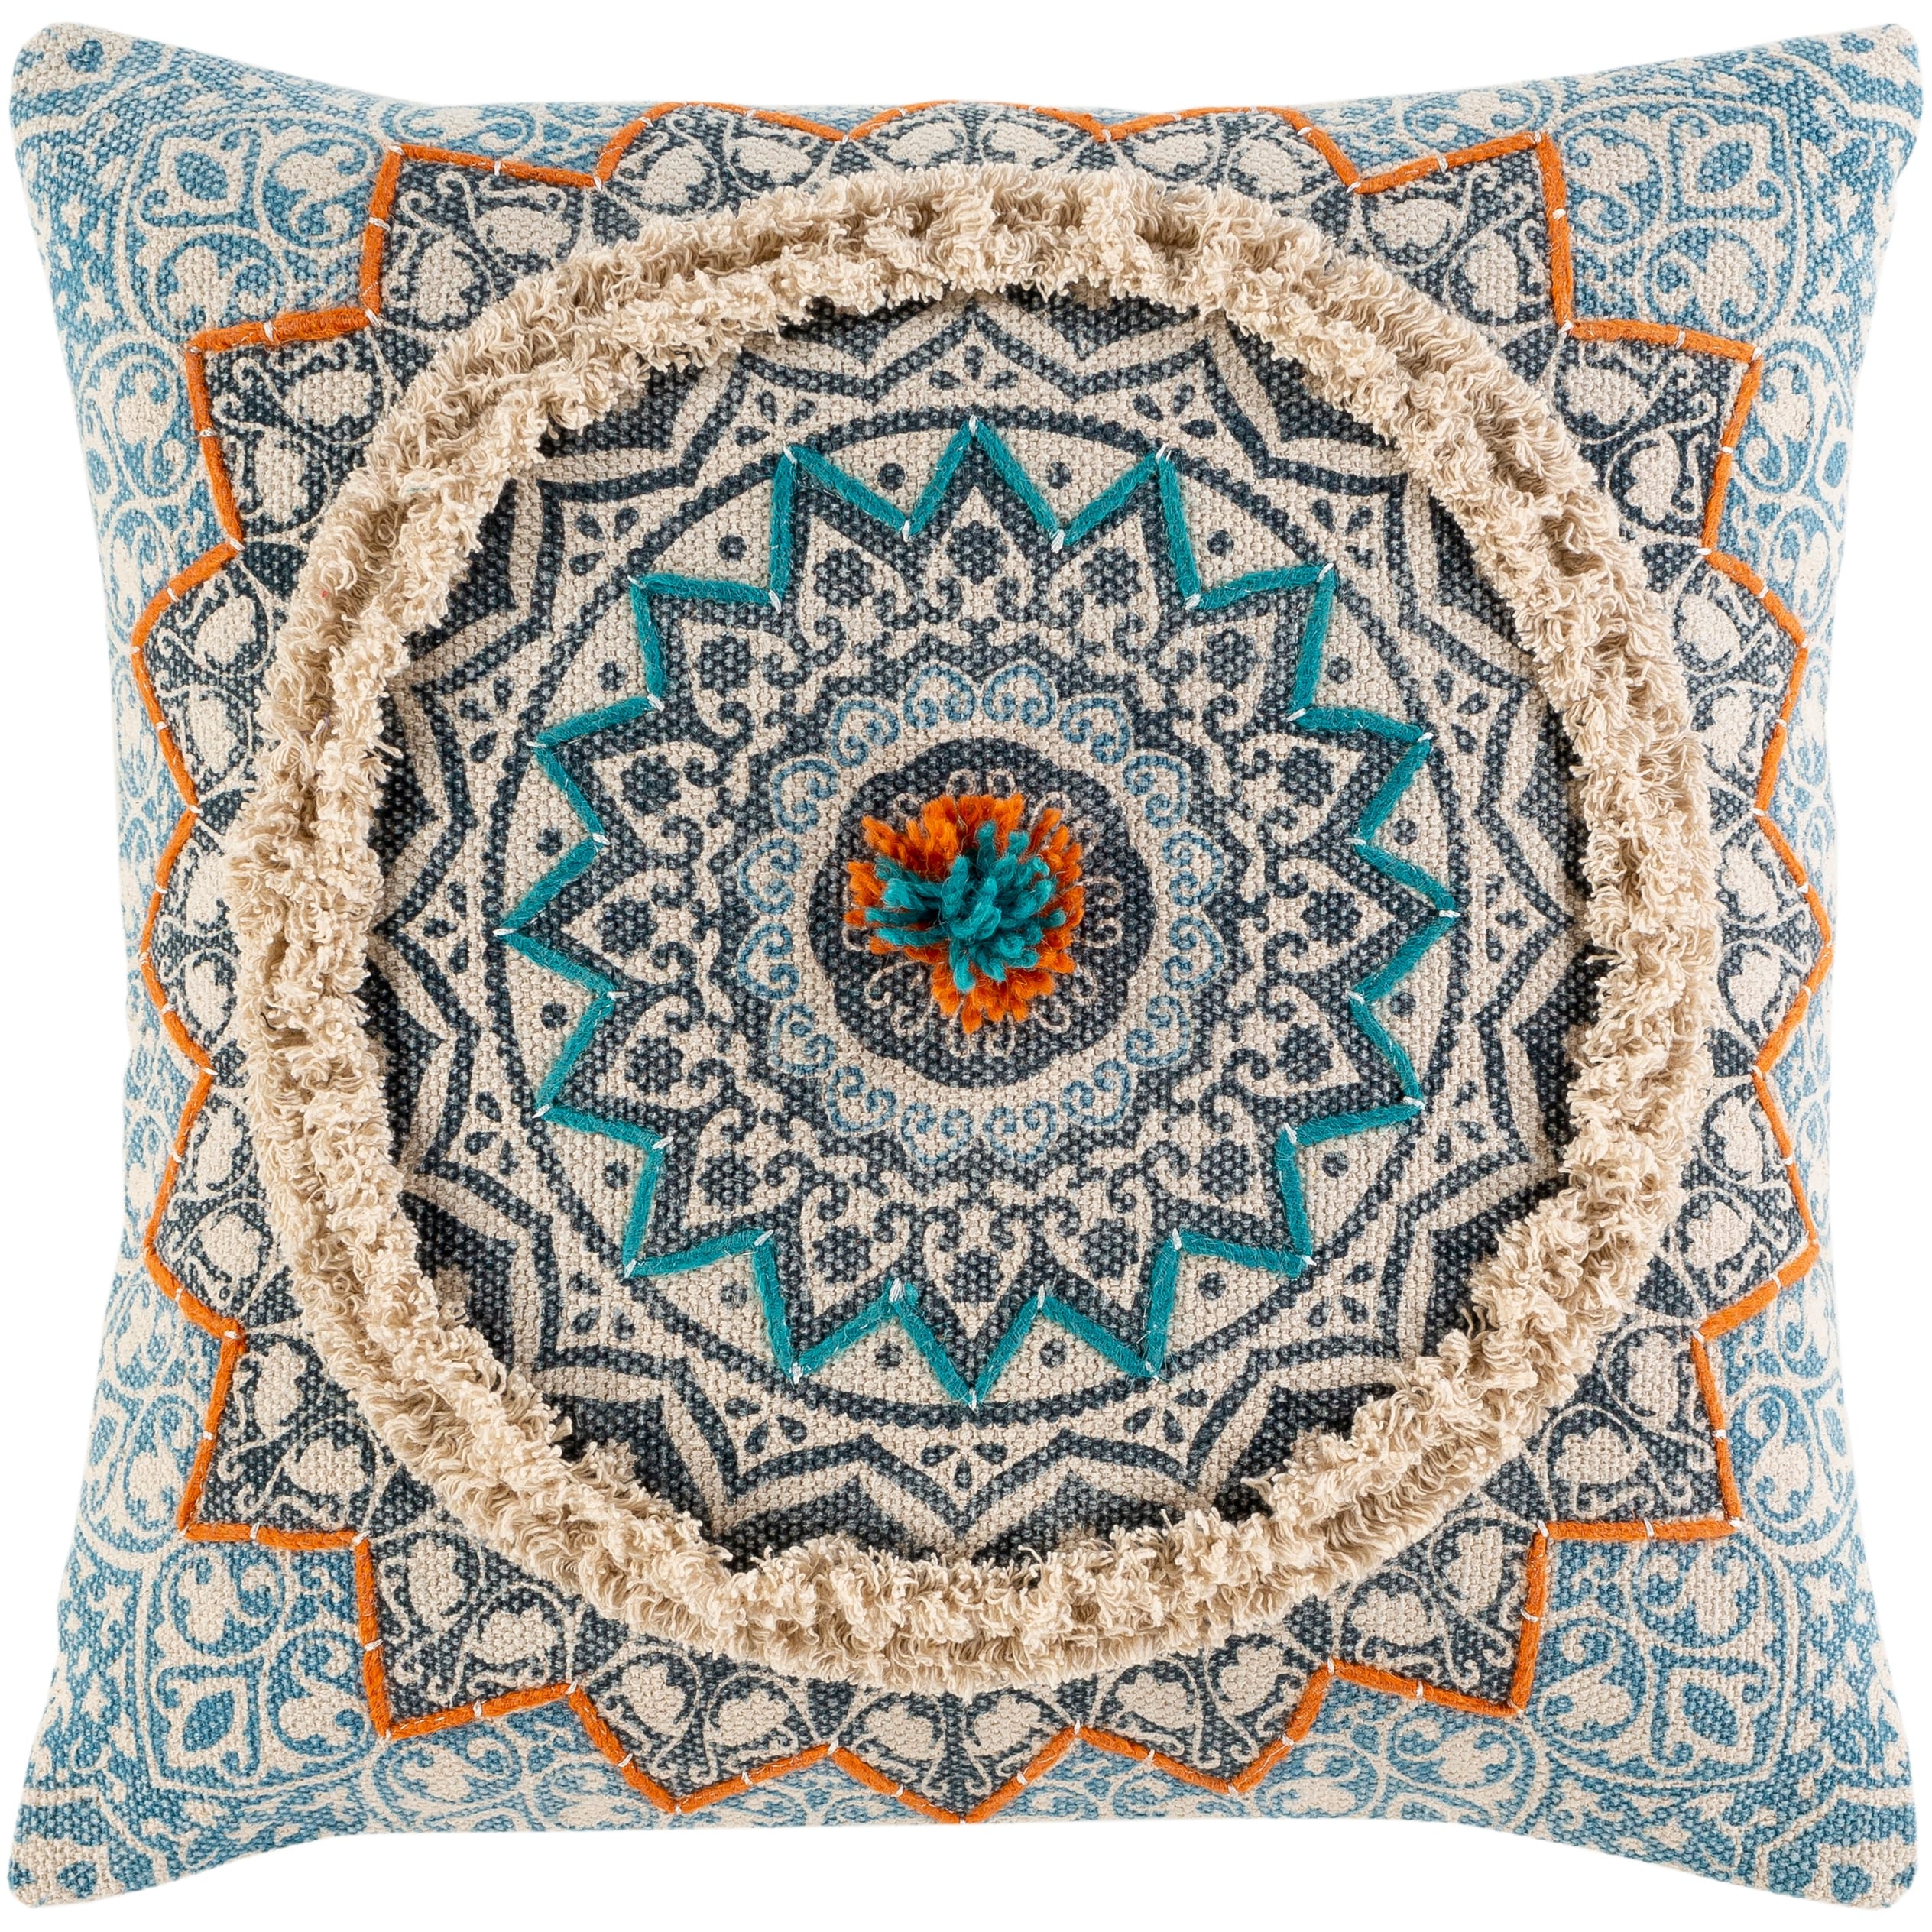 Adabana + Decorative Boho Throw Pillow Covers